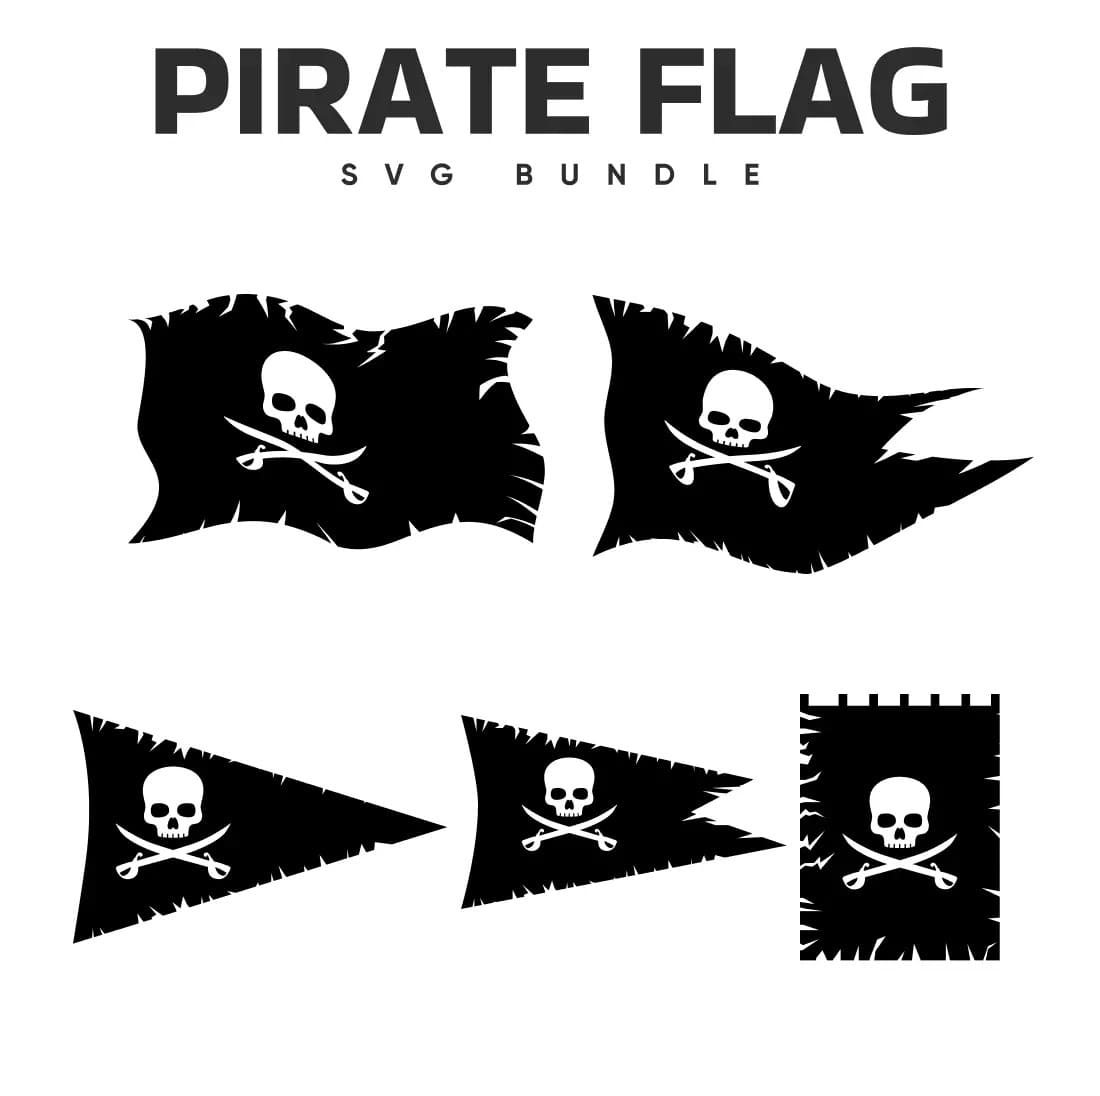 Pirate Flag SVG Bundle Preview image.